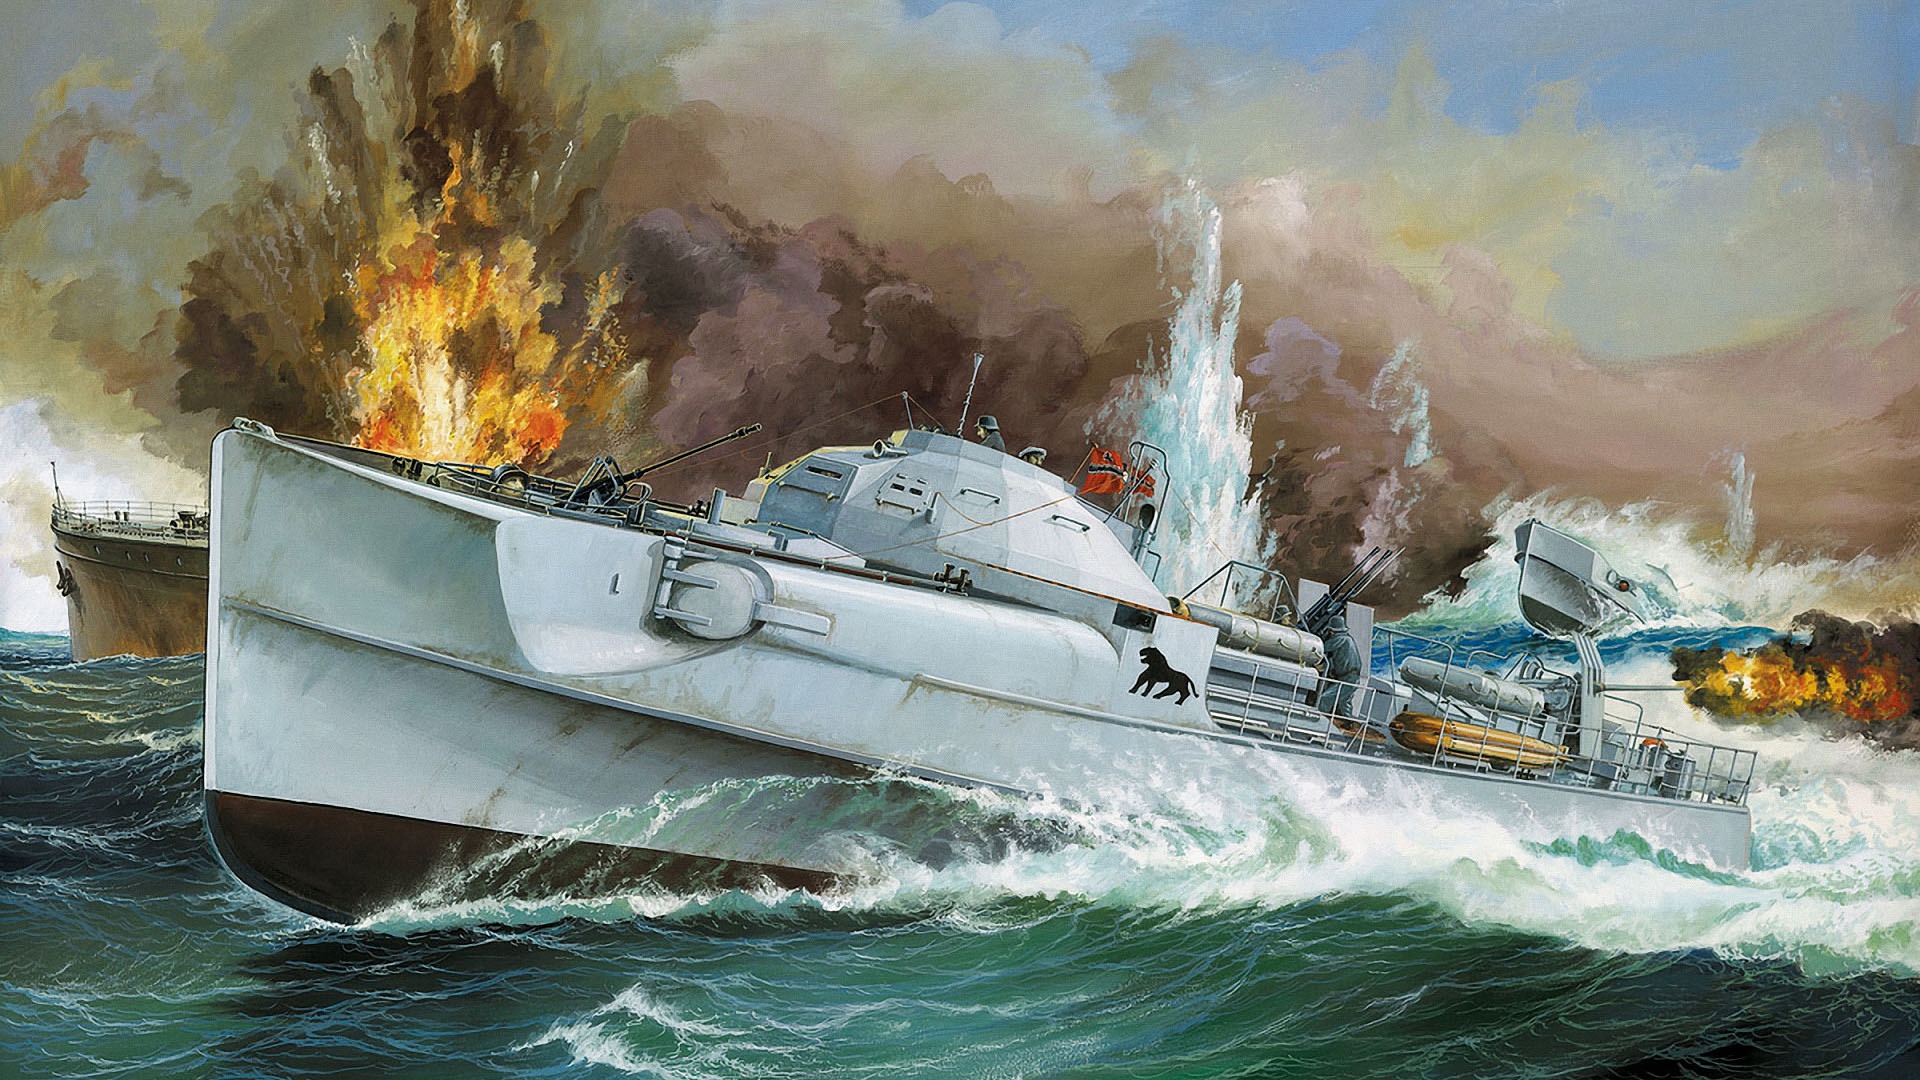 General 1920x1080 World War II artwork vehicle military Germany war boat